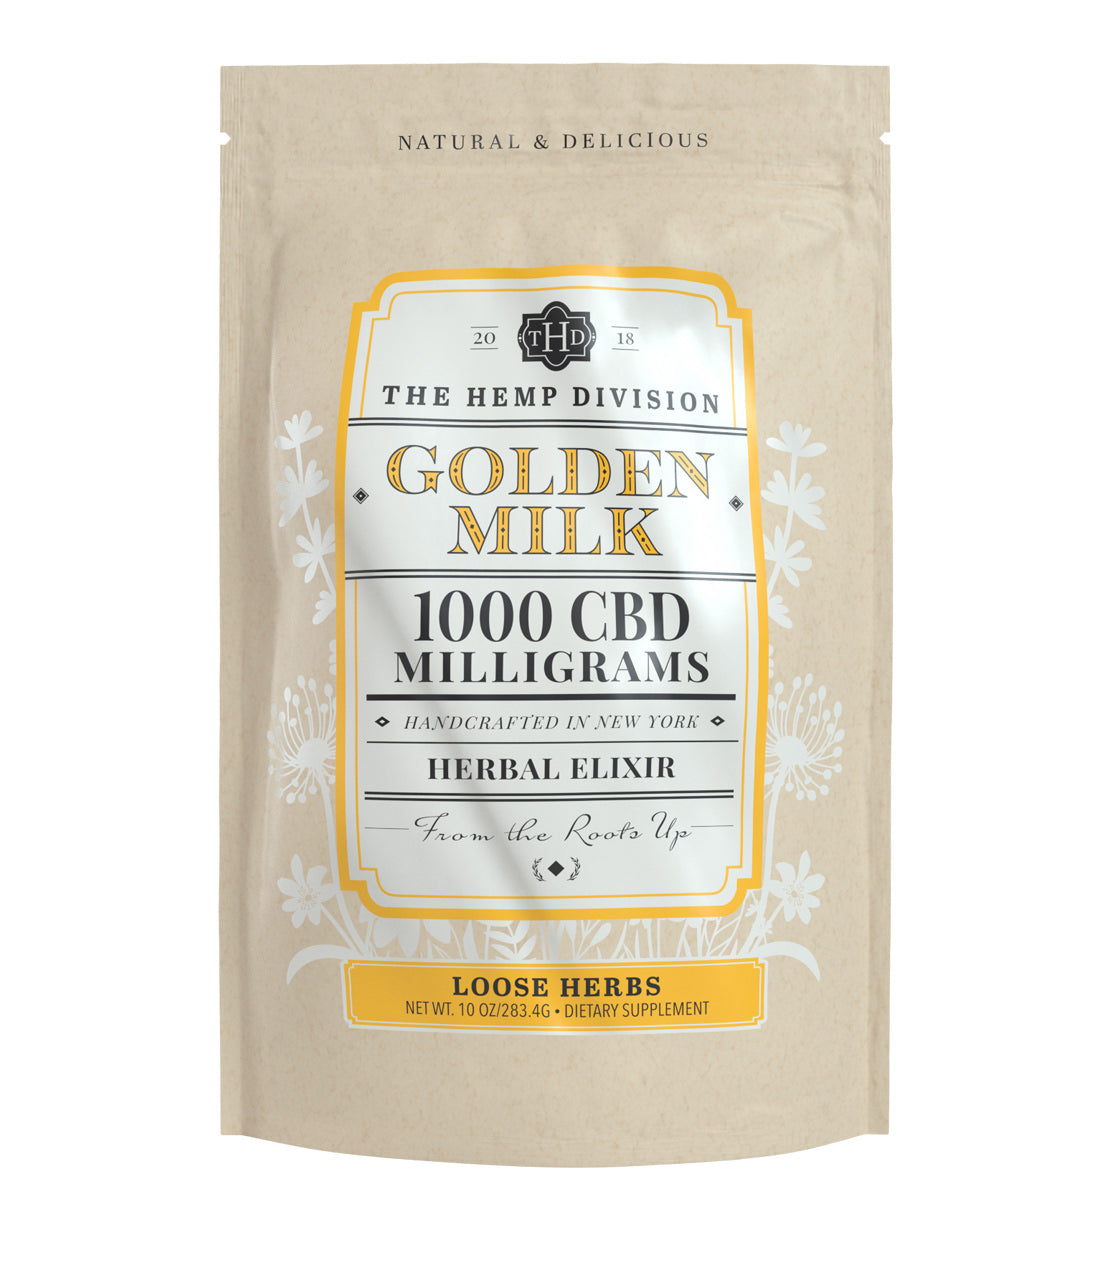 Golden Milk - 1000 MG CBD - Loose 10 oz. Bag - Harney & Sons Fine Teas